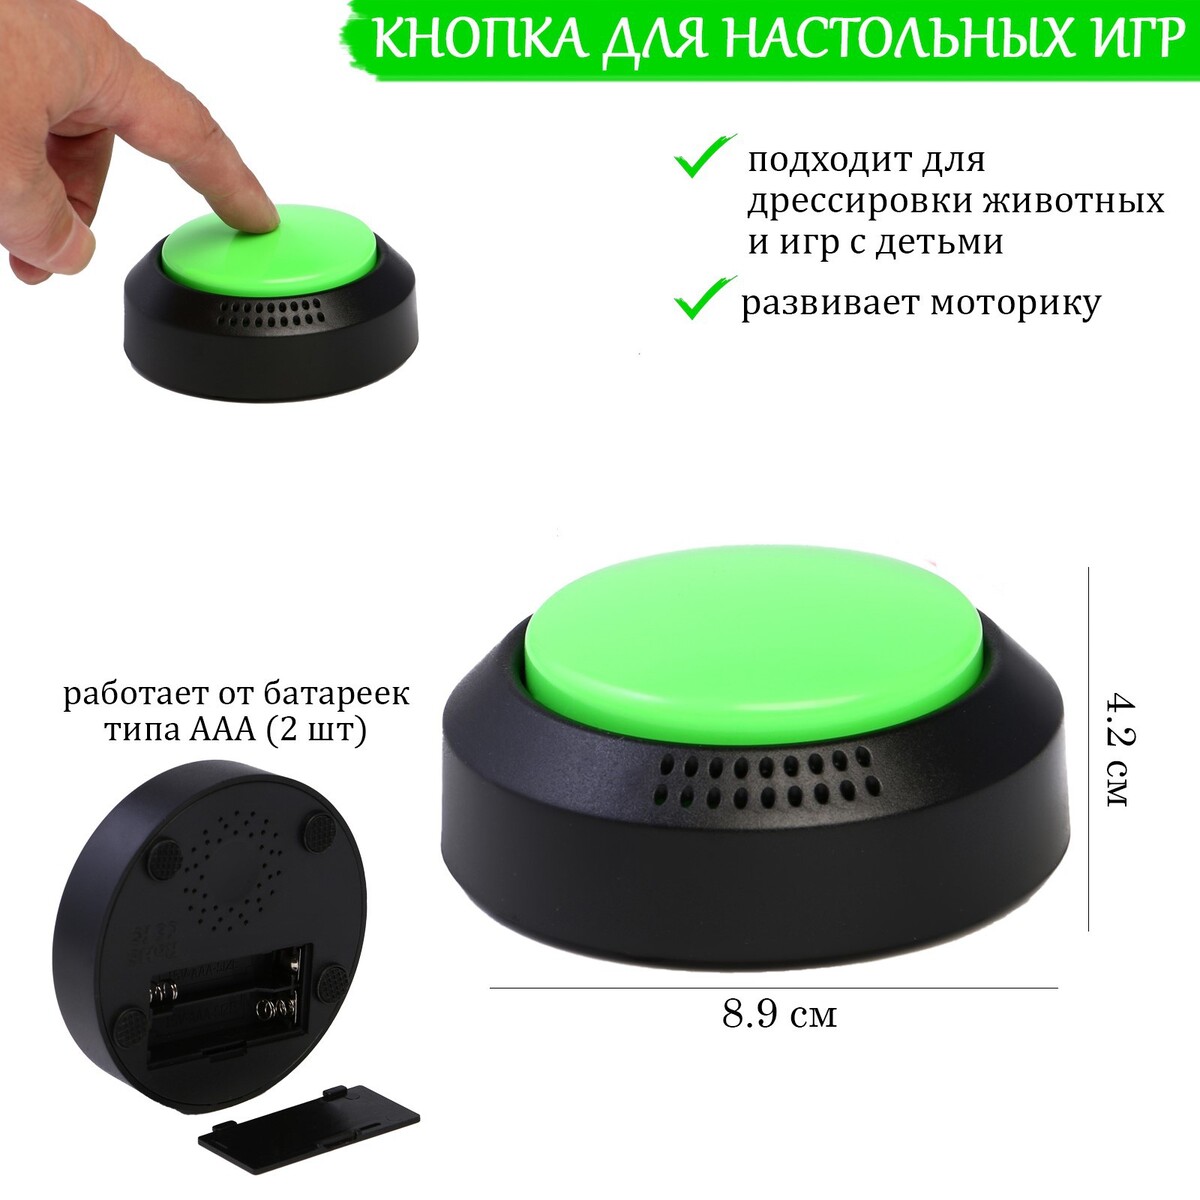 Зеленая кнопка для игр, 2 аа, 8.9 х 4.2 см No brand 06020806 - фото 1